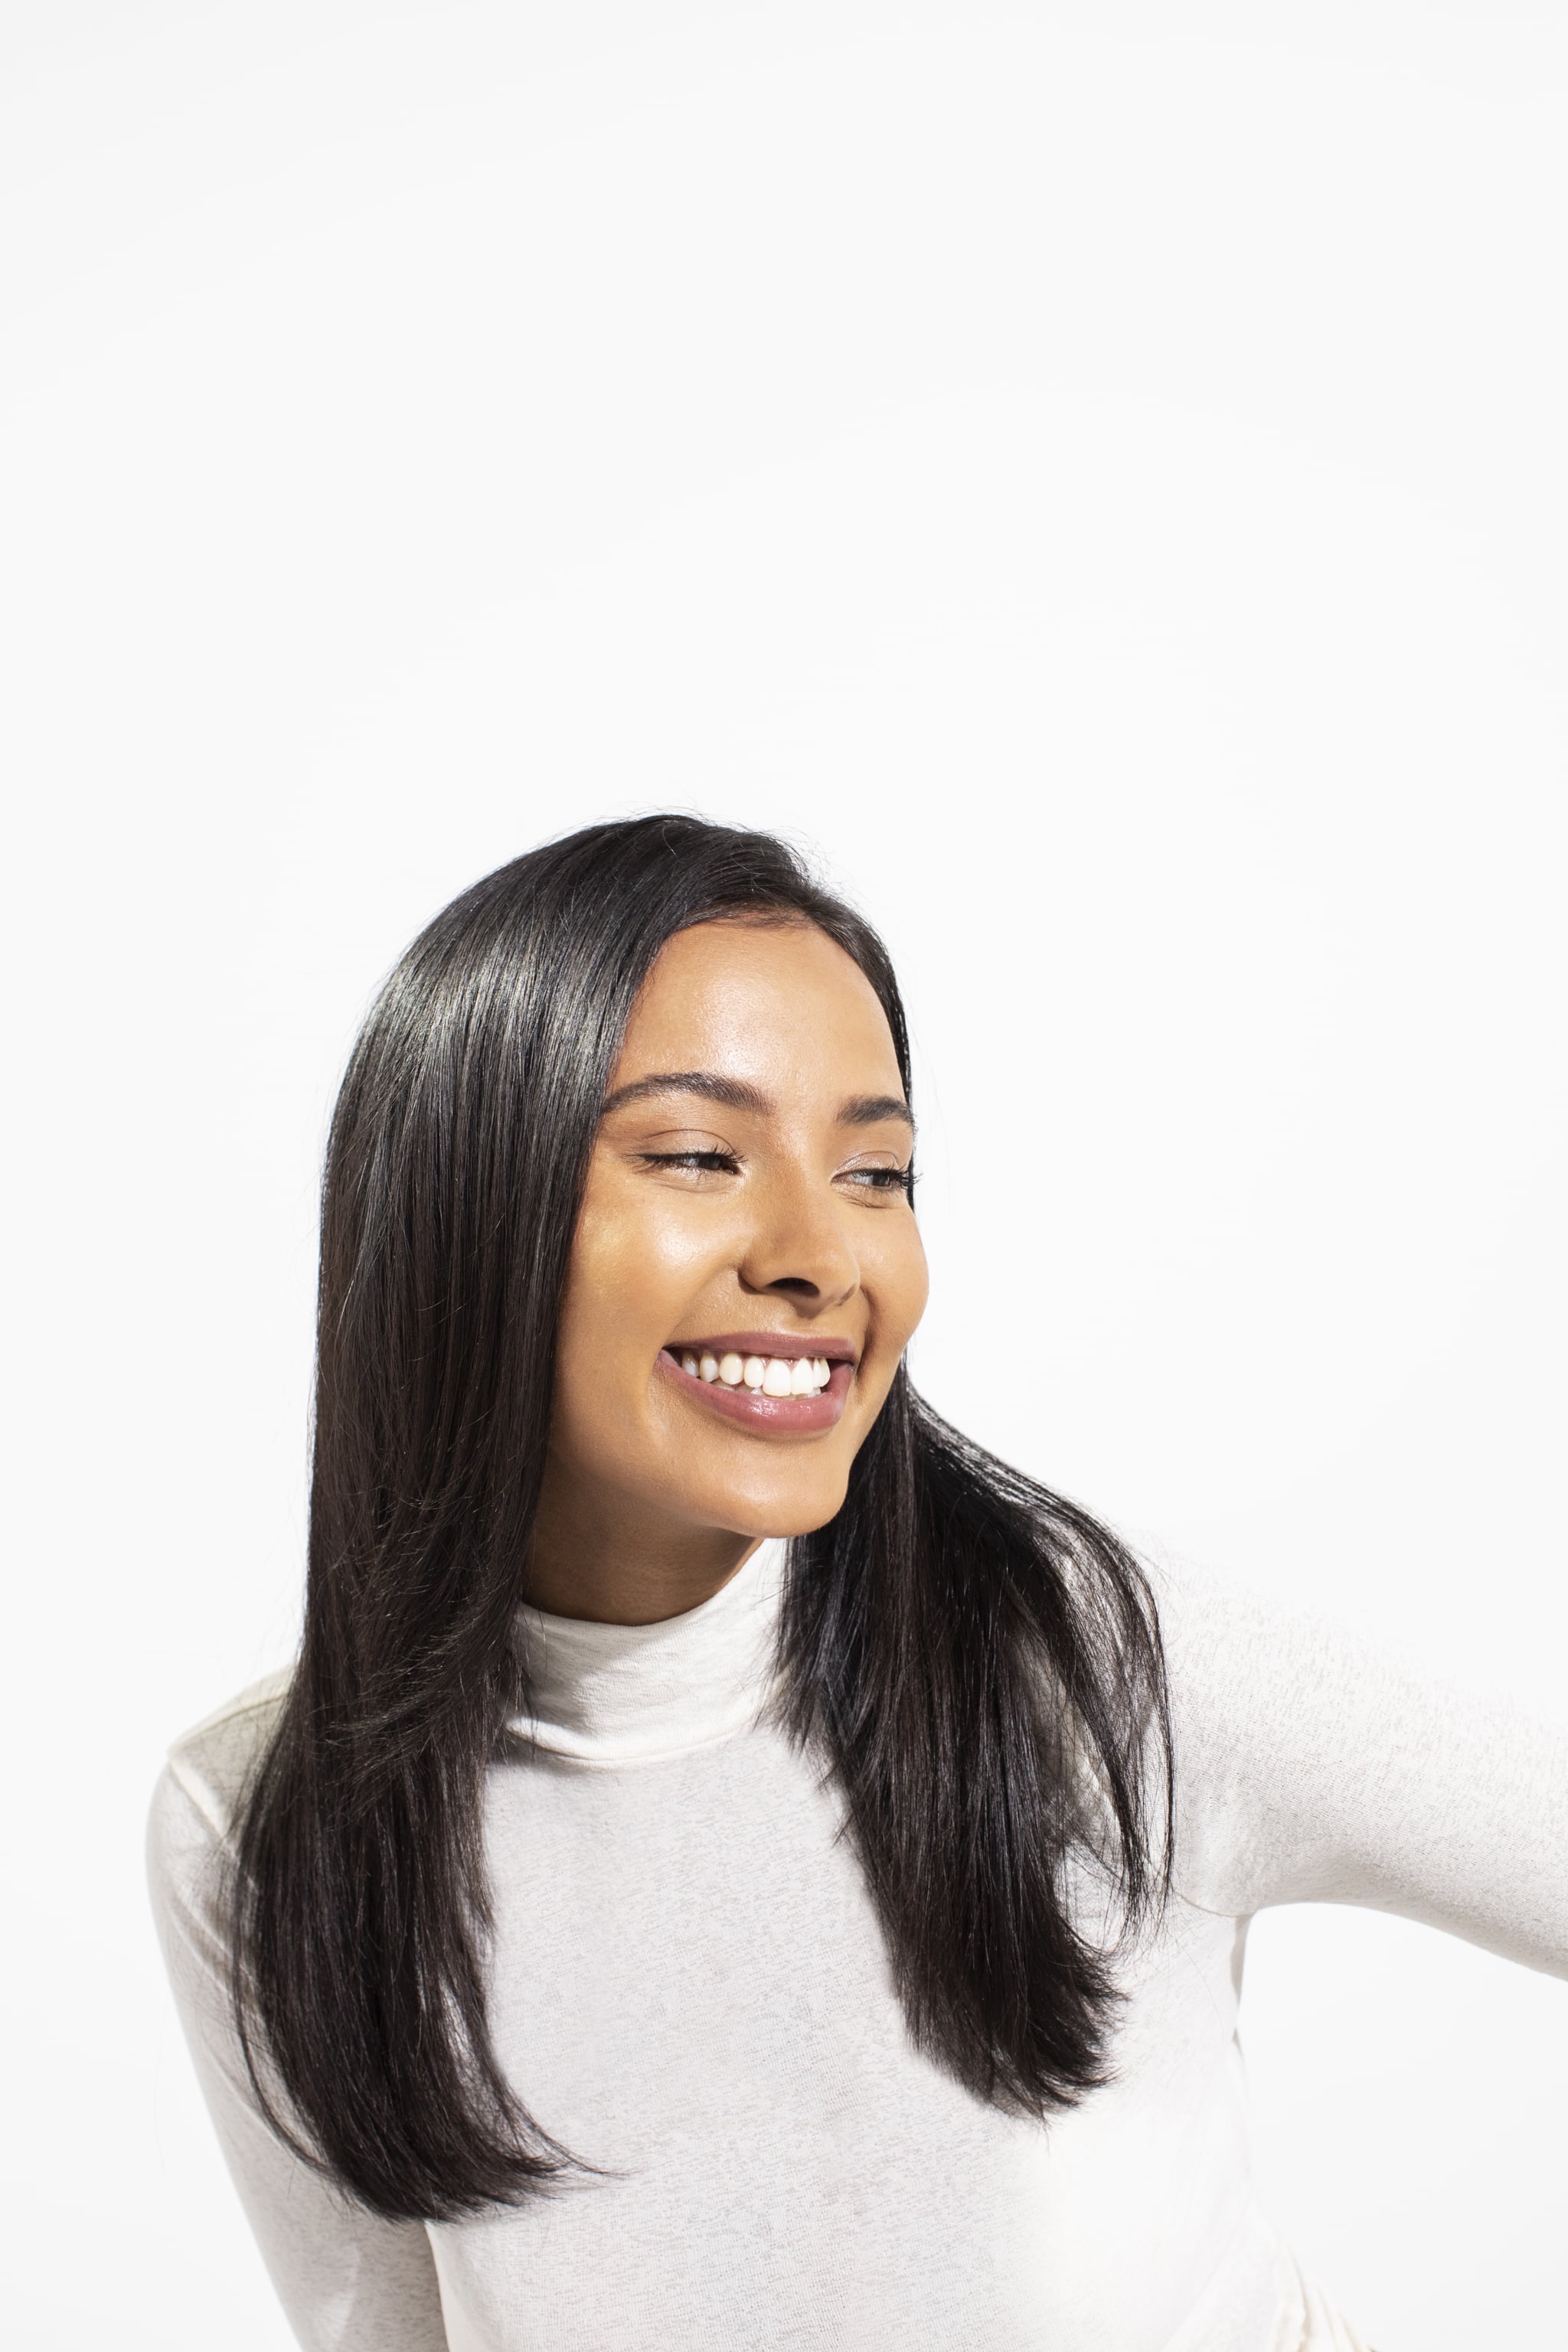 Maya Jama Is the New Face of Aussie Hair | POPSUGAR Beauty UK